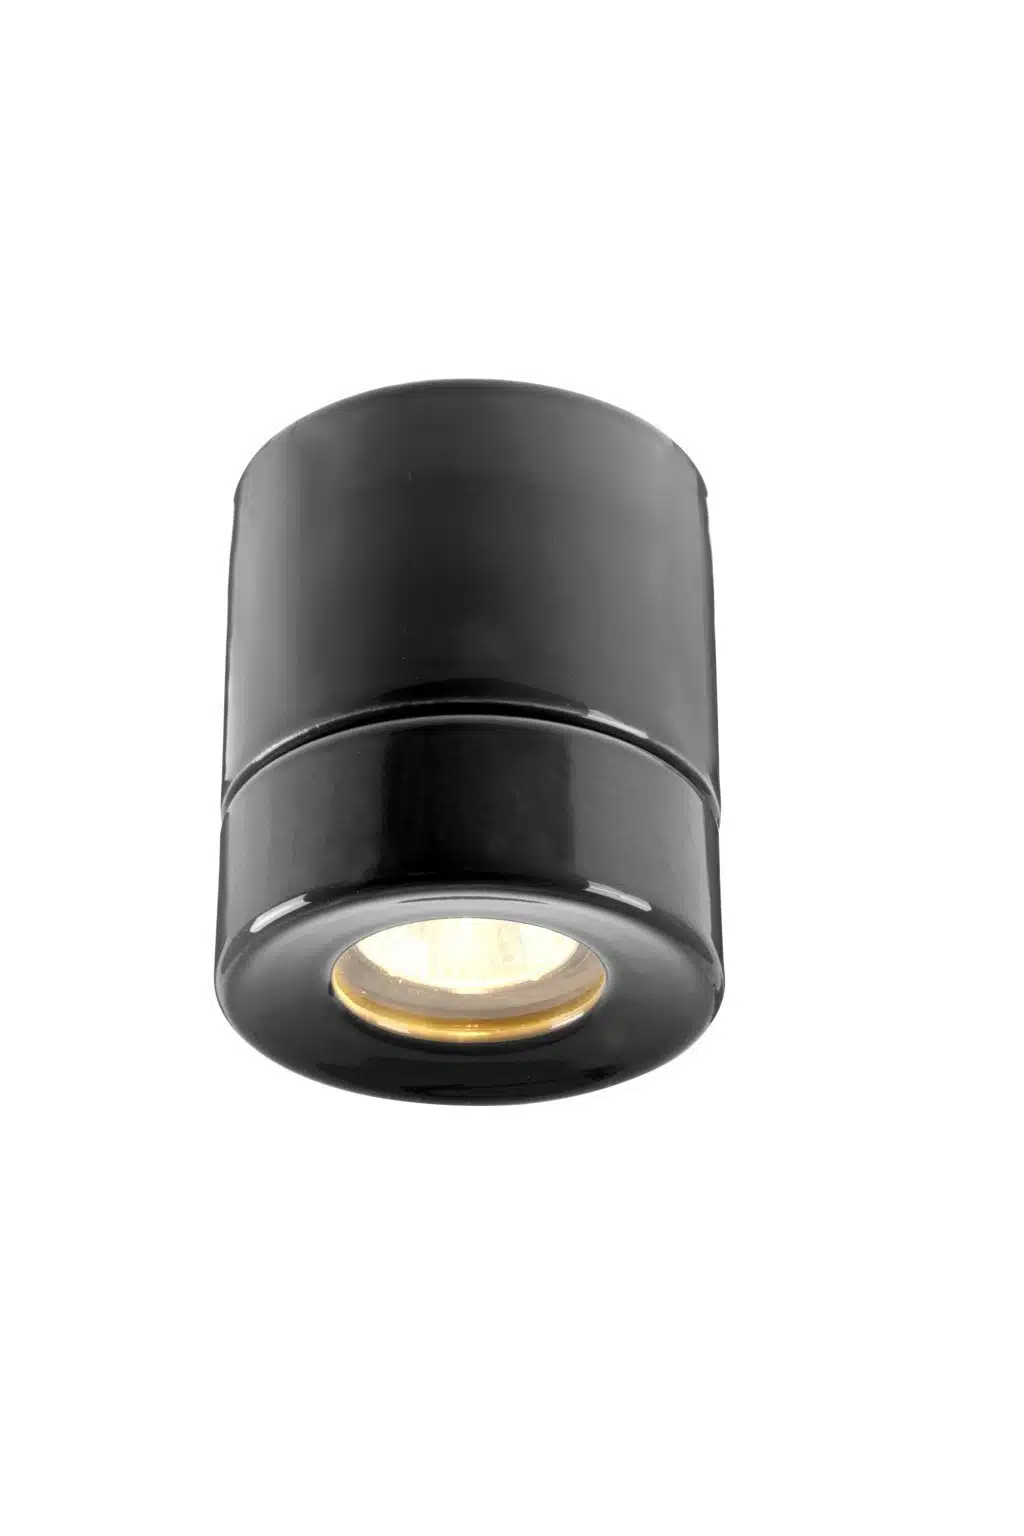 Light on ifo electric plafondlamp downlight porselein zwart gu10 tuinextra